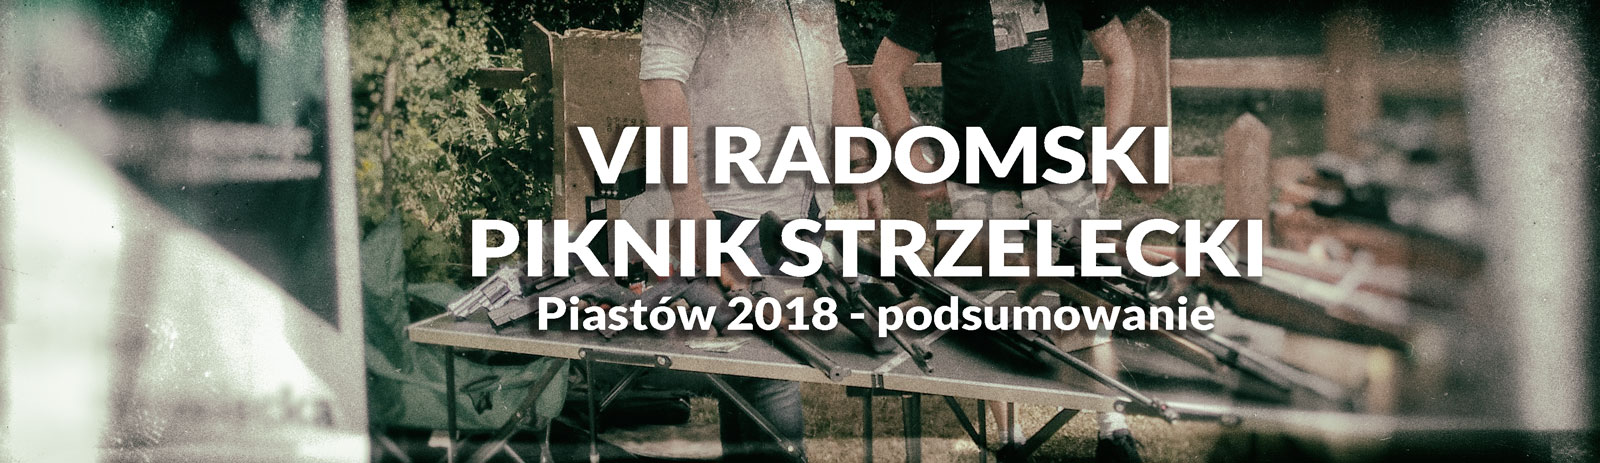 VII radomski piknik strzelecki 2018